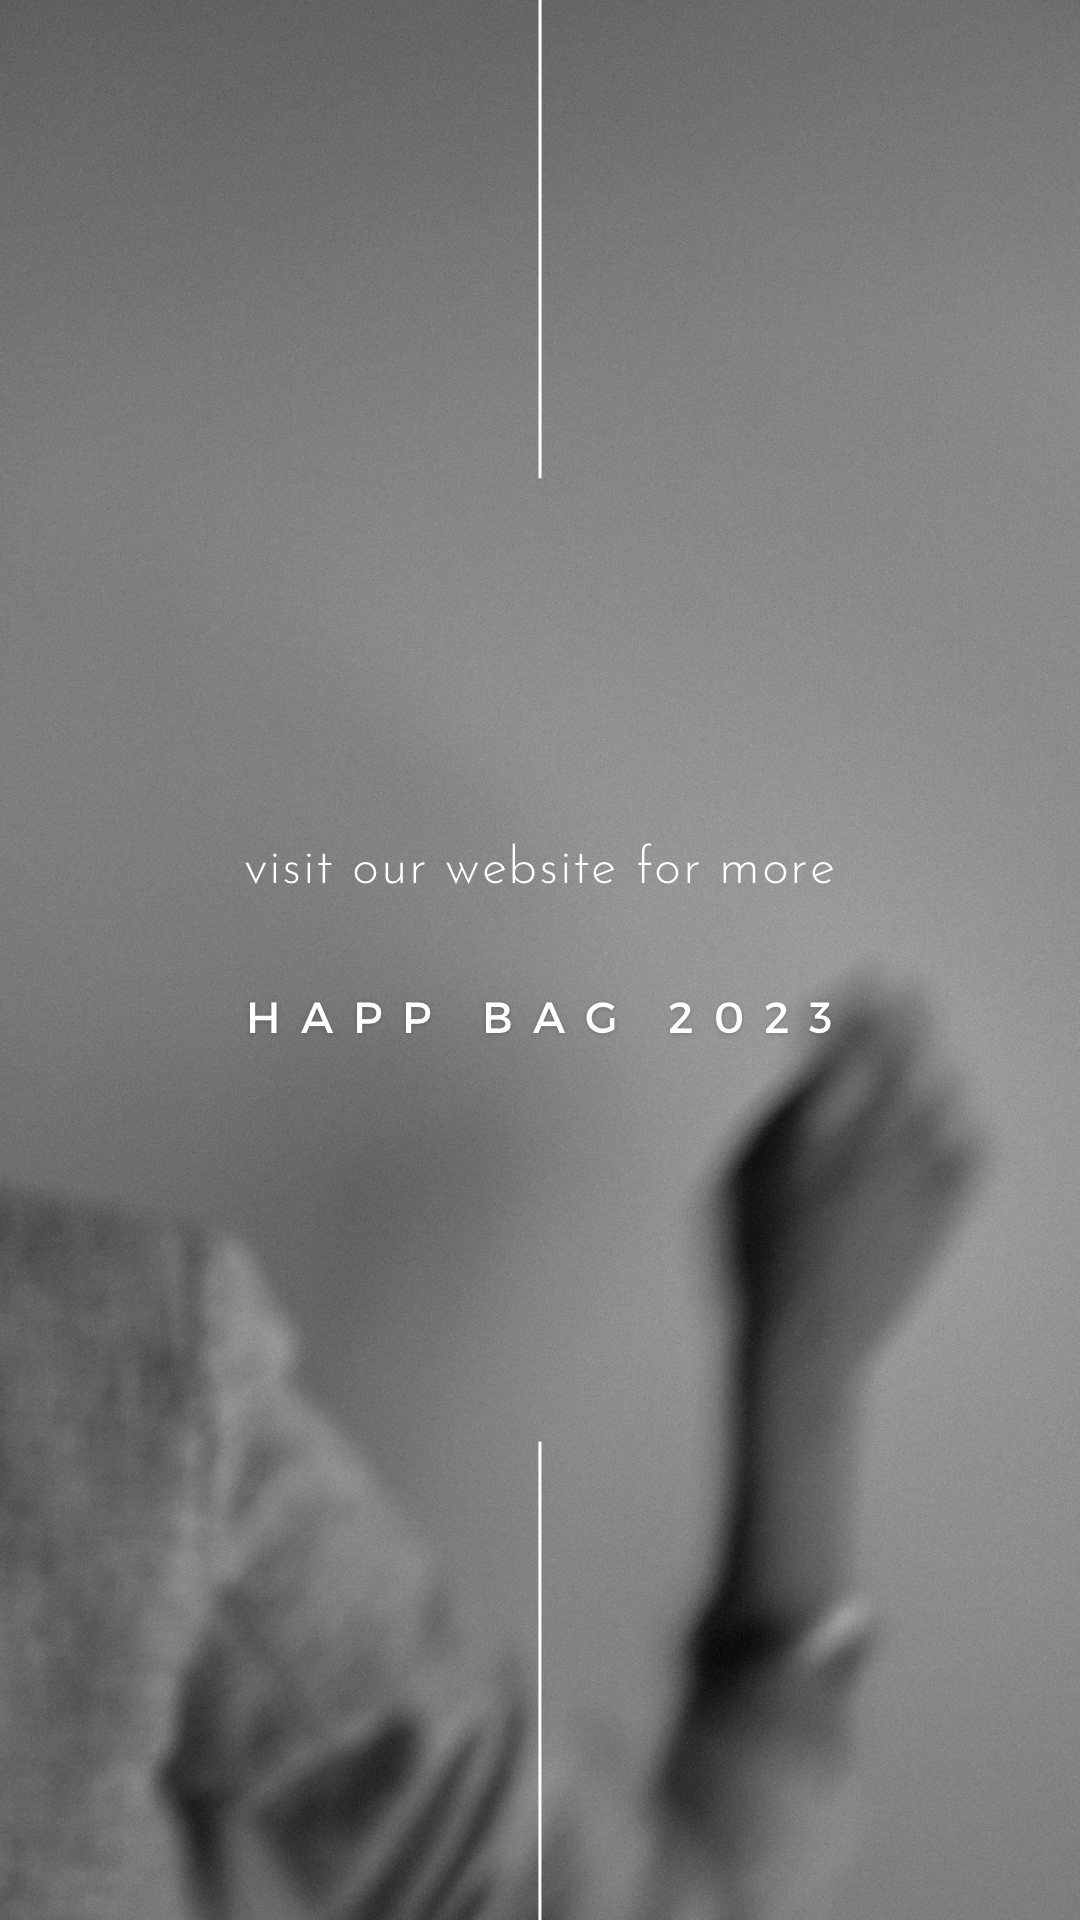 happy bag 2023